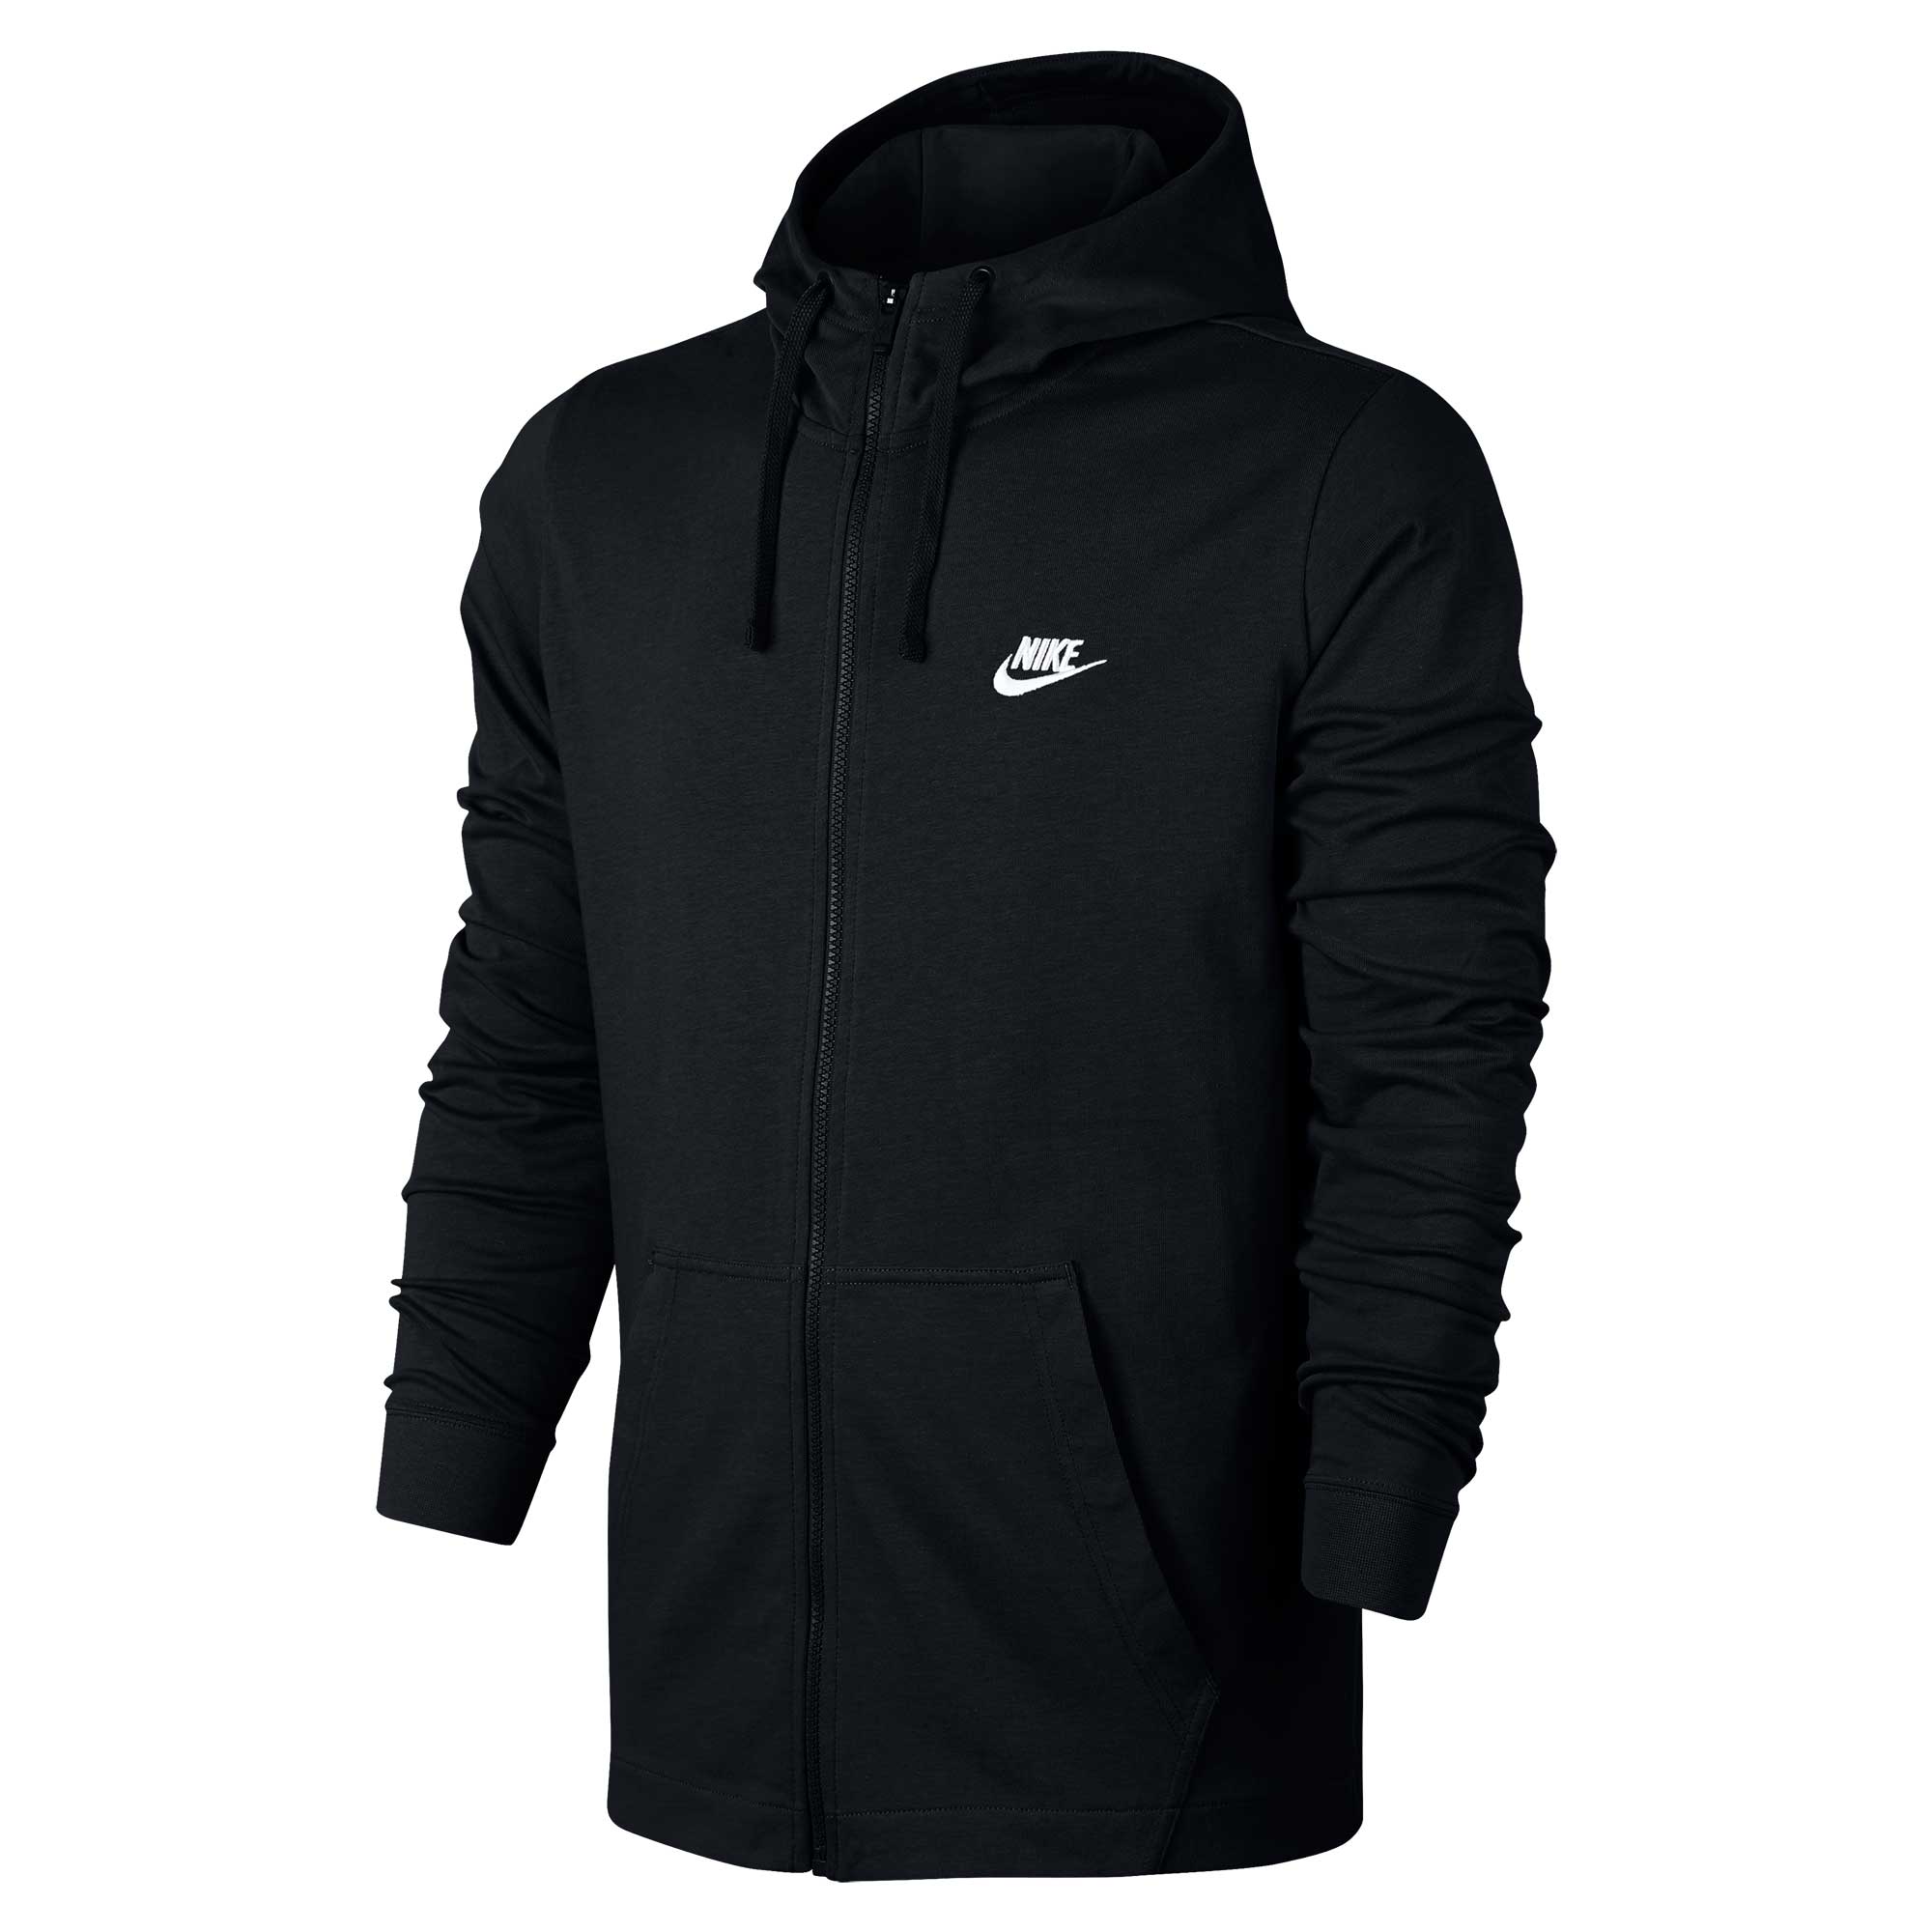 Куртка Nike мужская с капюшоном 893798-010